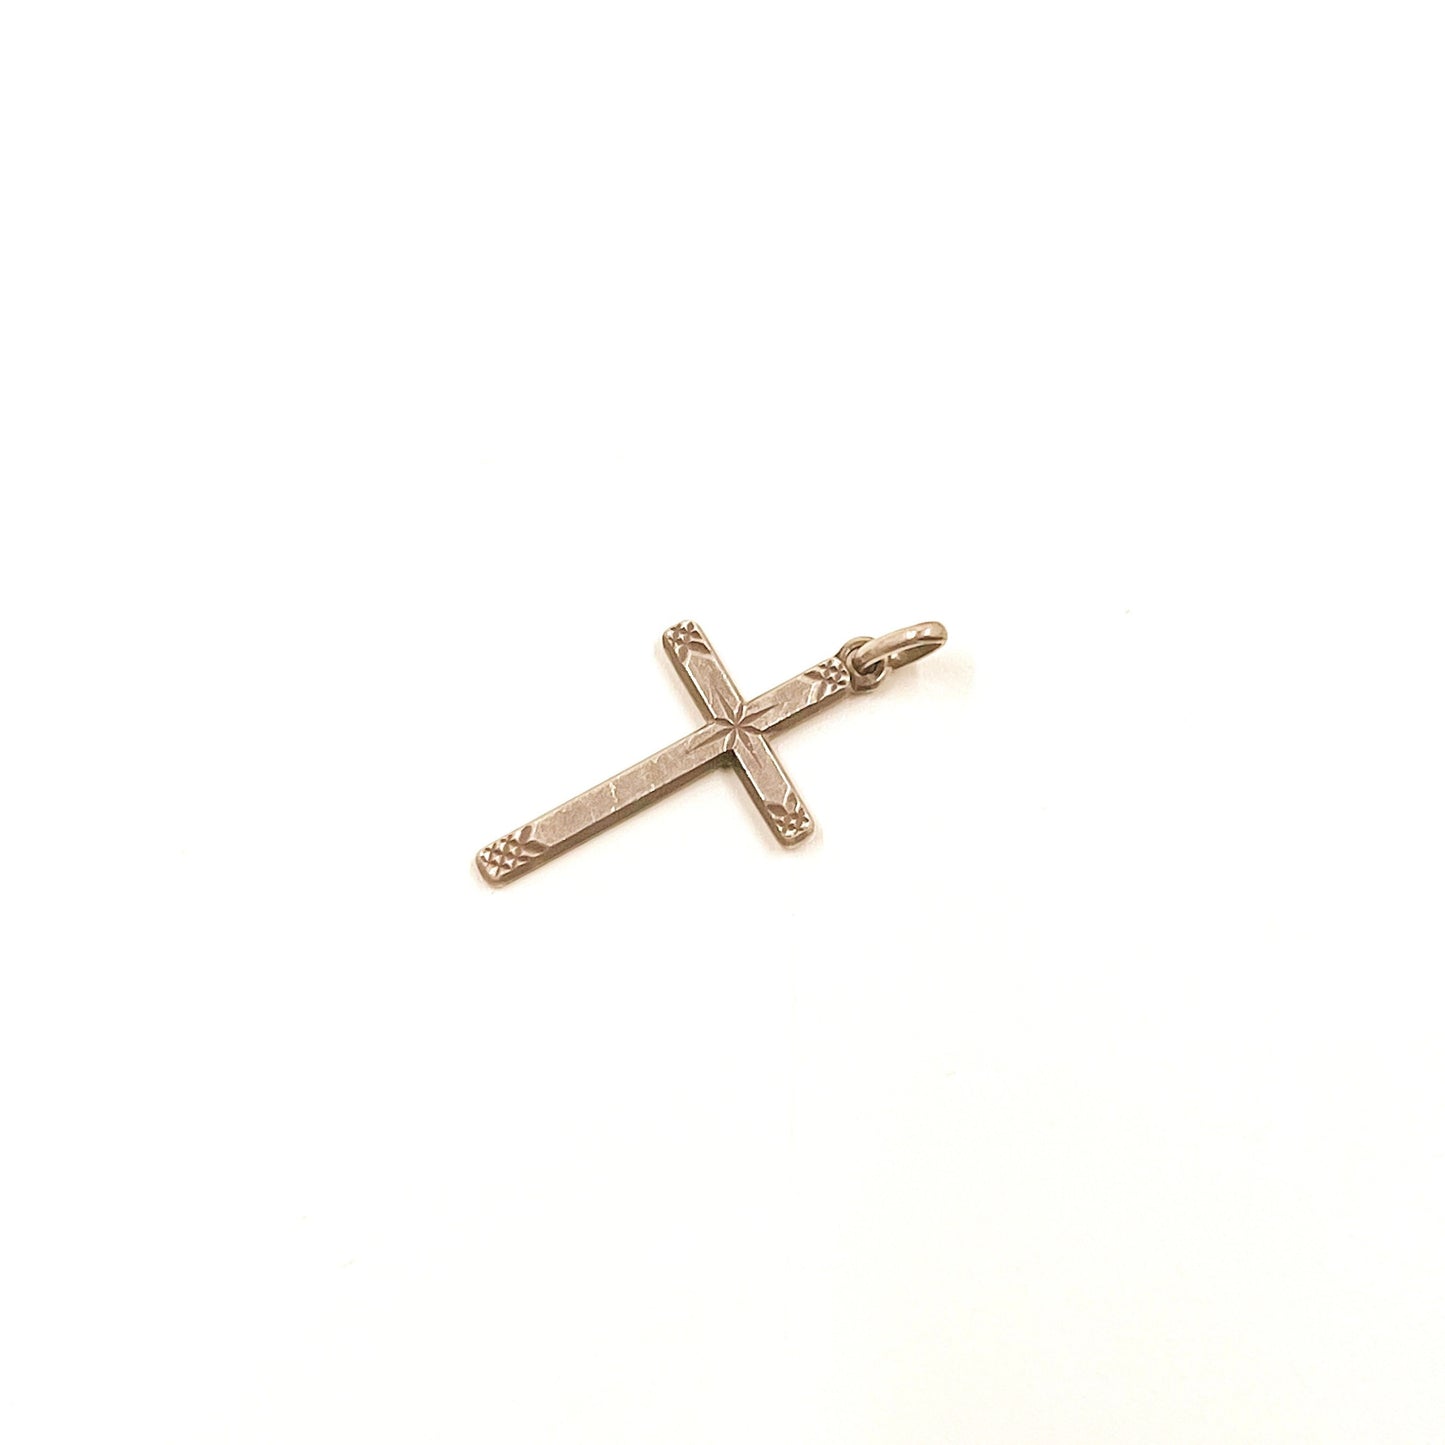 Vintage Engraved Silver Cross Pendant | Vintage Sterling Cross Charm